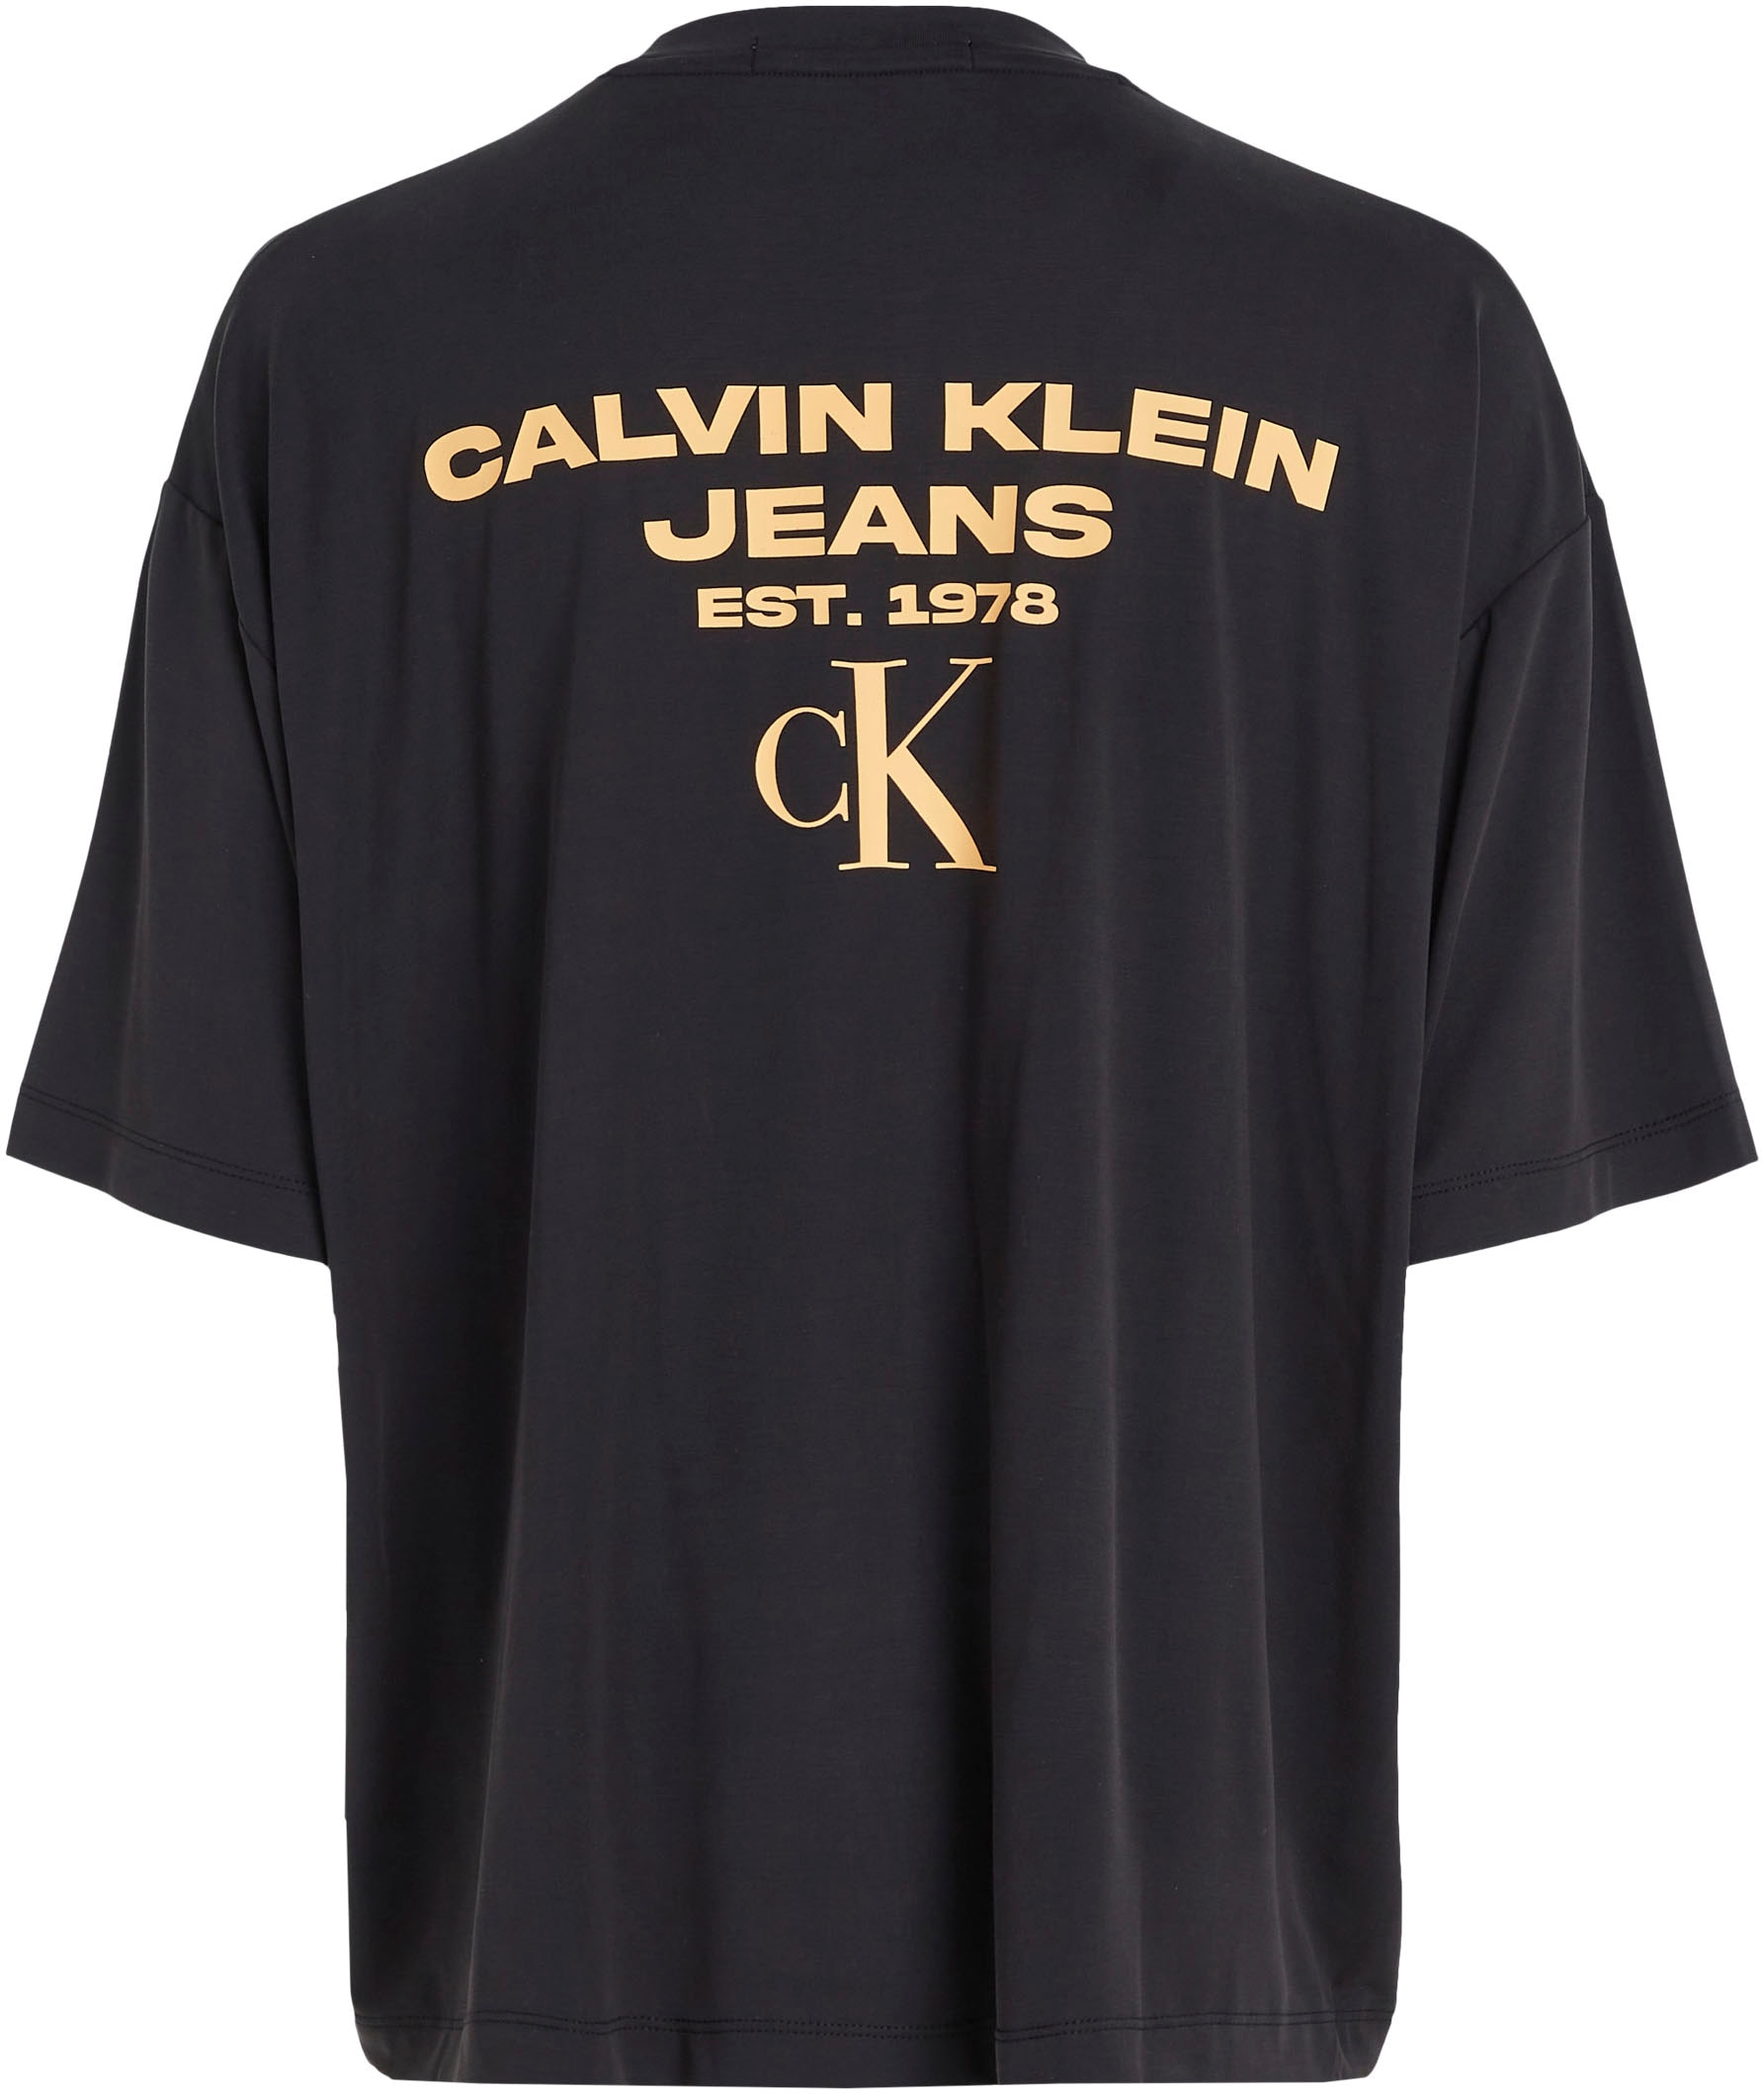 »BACK MODAL bestellen Jeans Jelmoli-Versand | Klein Calvin BOYFRIEND LOGO online T-Shirt TEE«